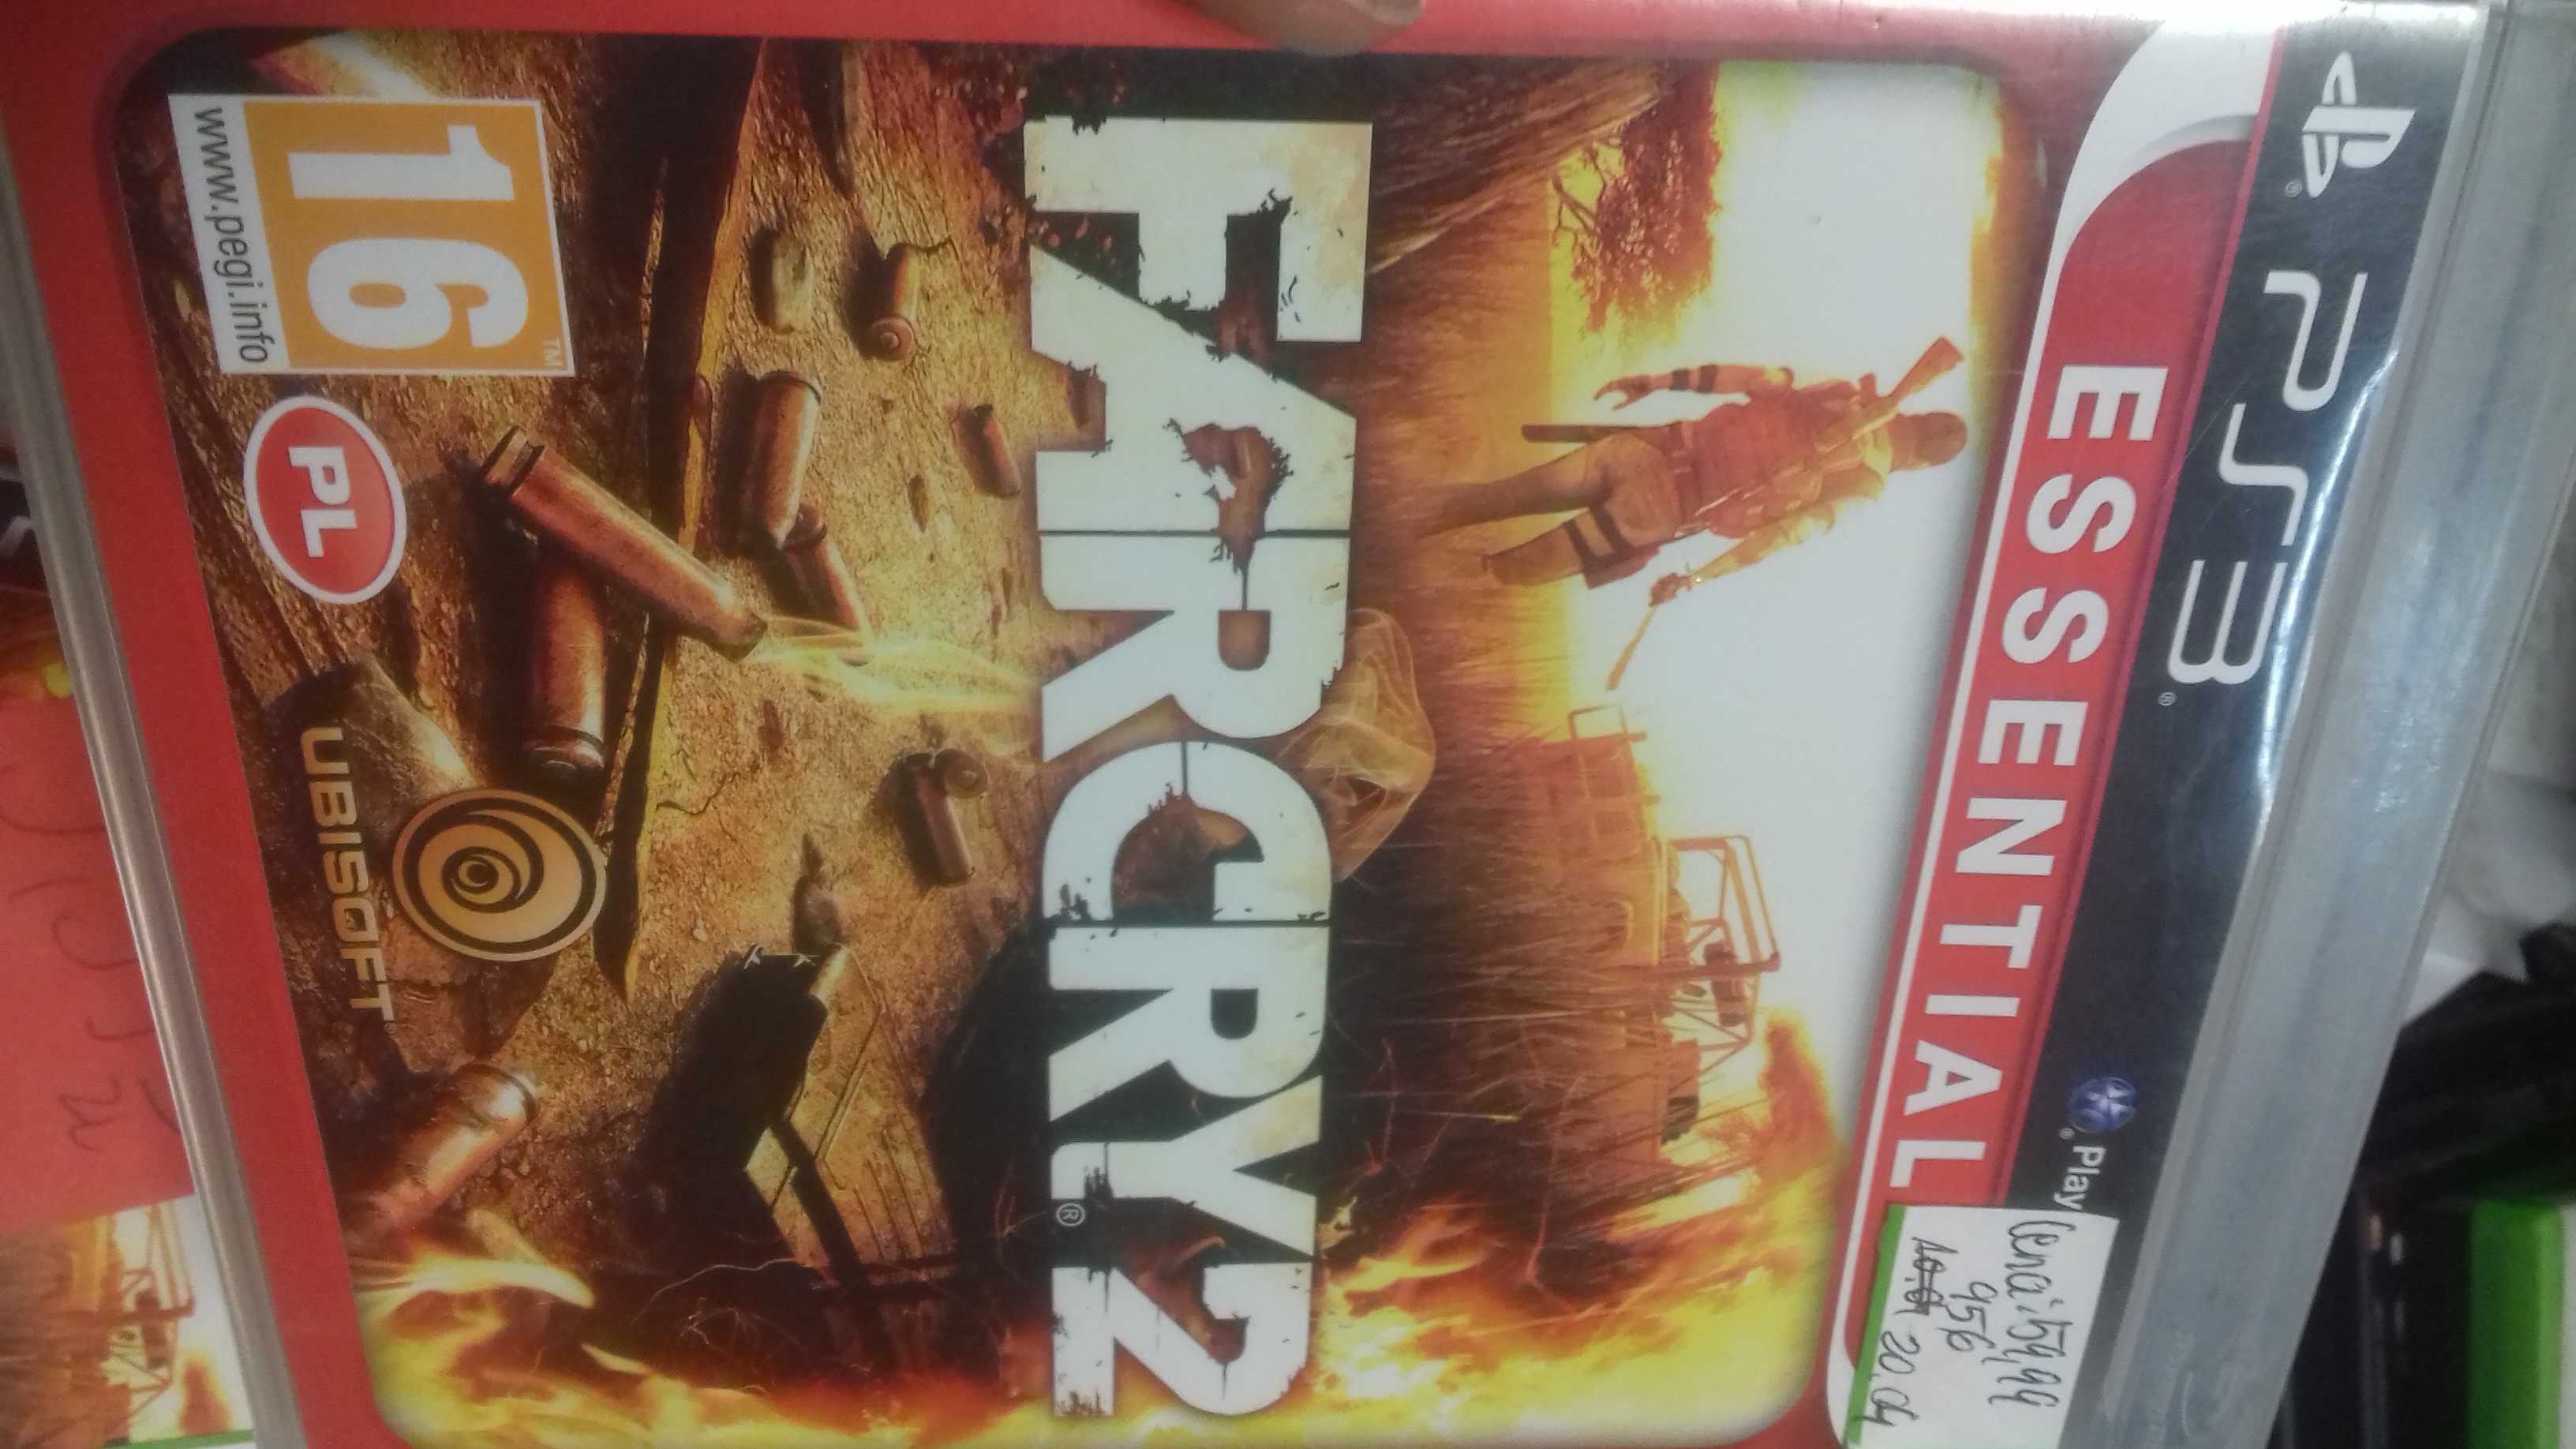 Far cry 2 ps3, wersja polska